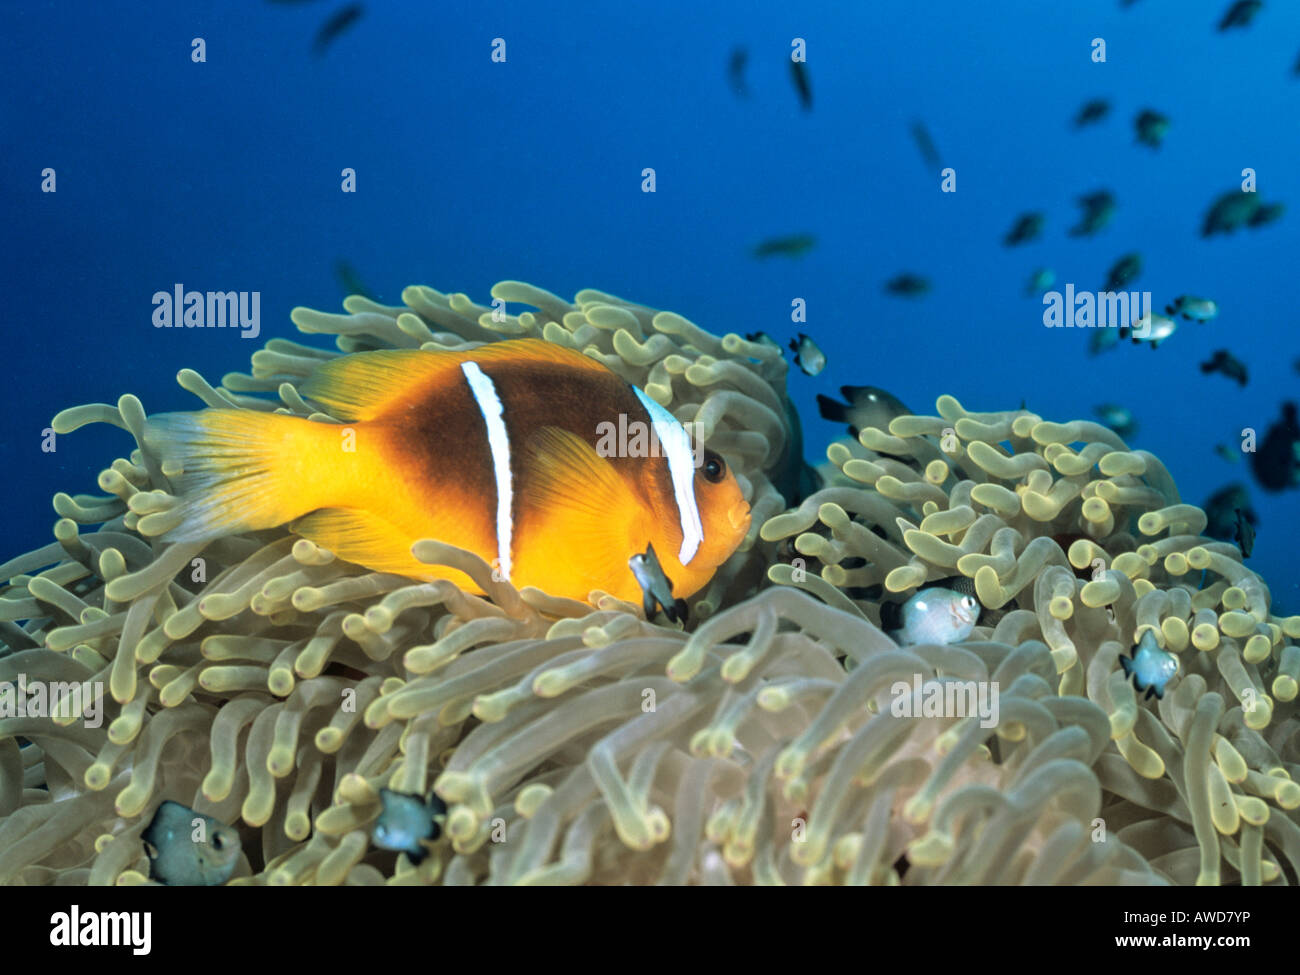 Mar Rosso o Clownfish Red sea Anemonefish o Twoband Anemonefish (Amphiprion bicinctus) e anemone marittimo (Actiniaria), simbiosi, Foto Stock